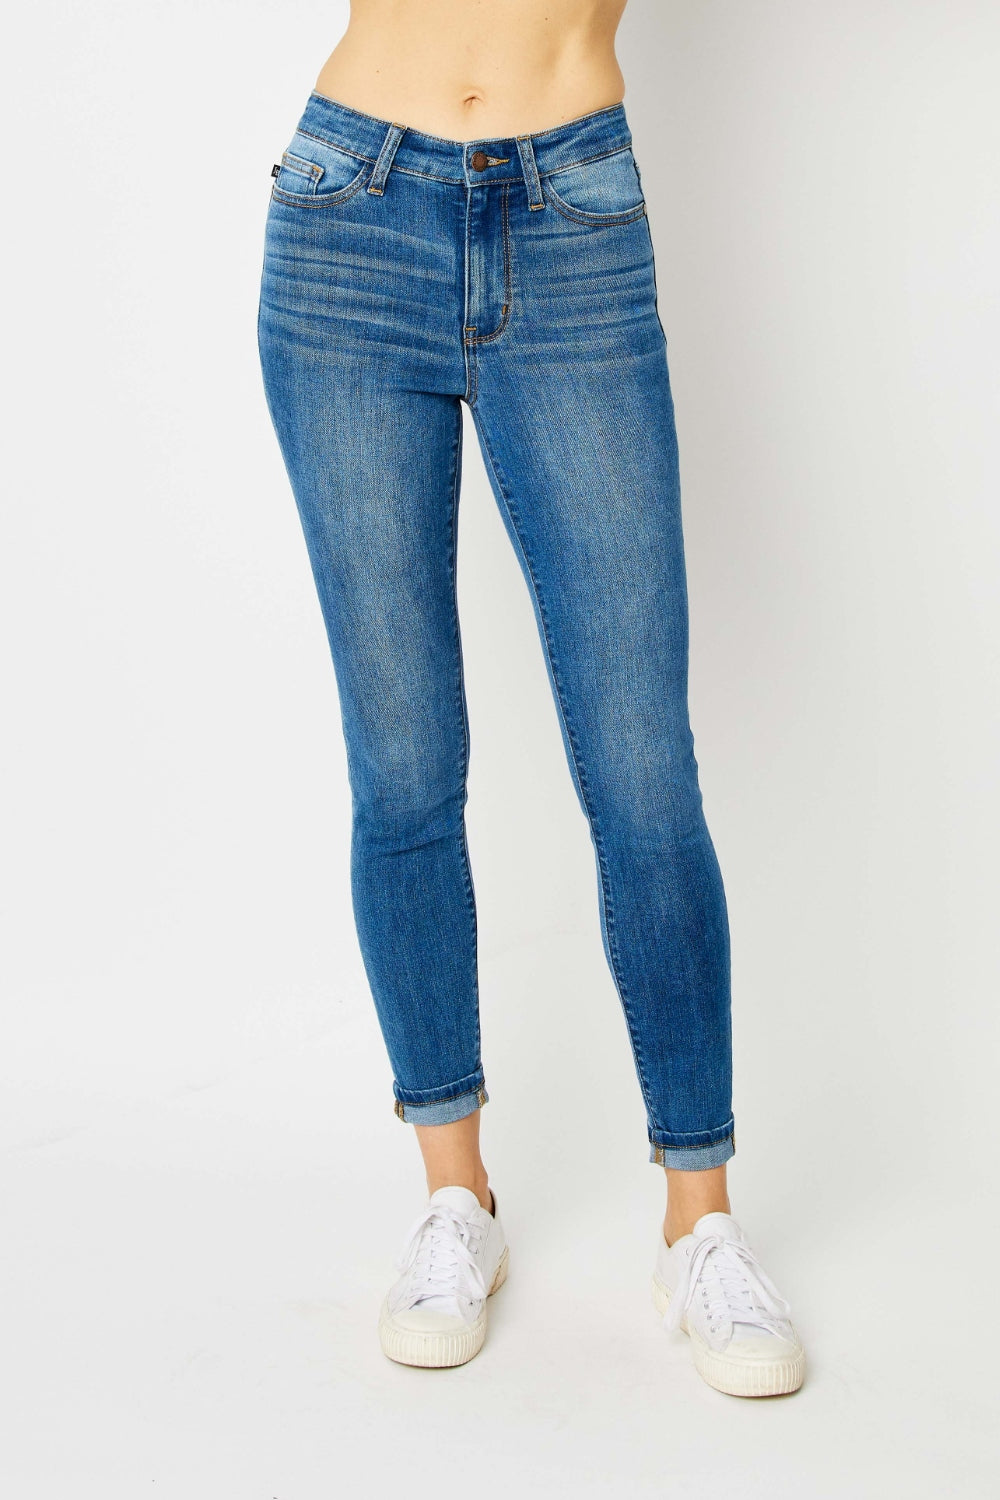 Women's Skinny Jeans - Cuffed Hem Skinny Jeans | Elegant Lioness